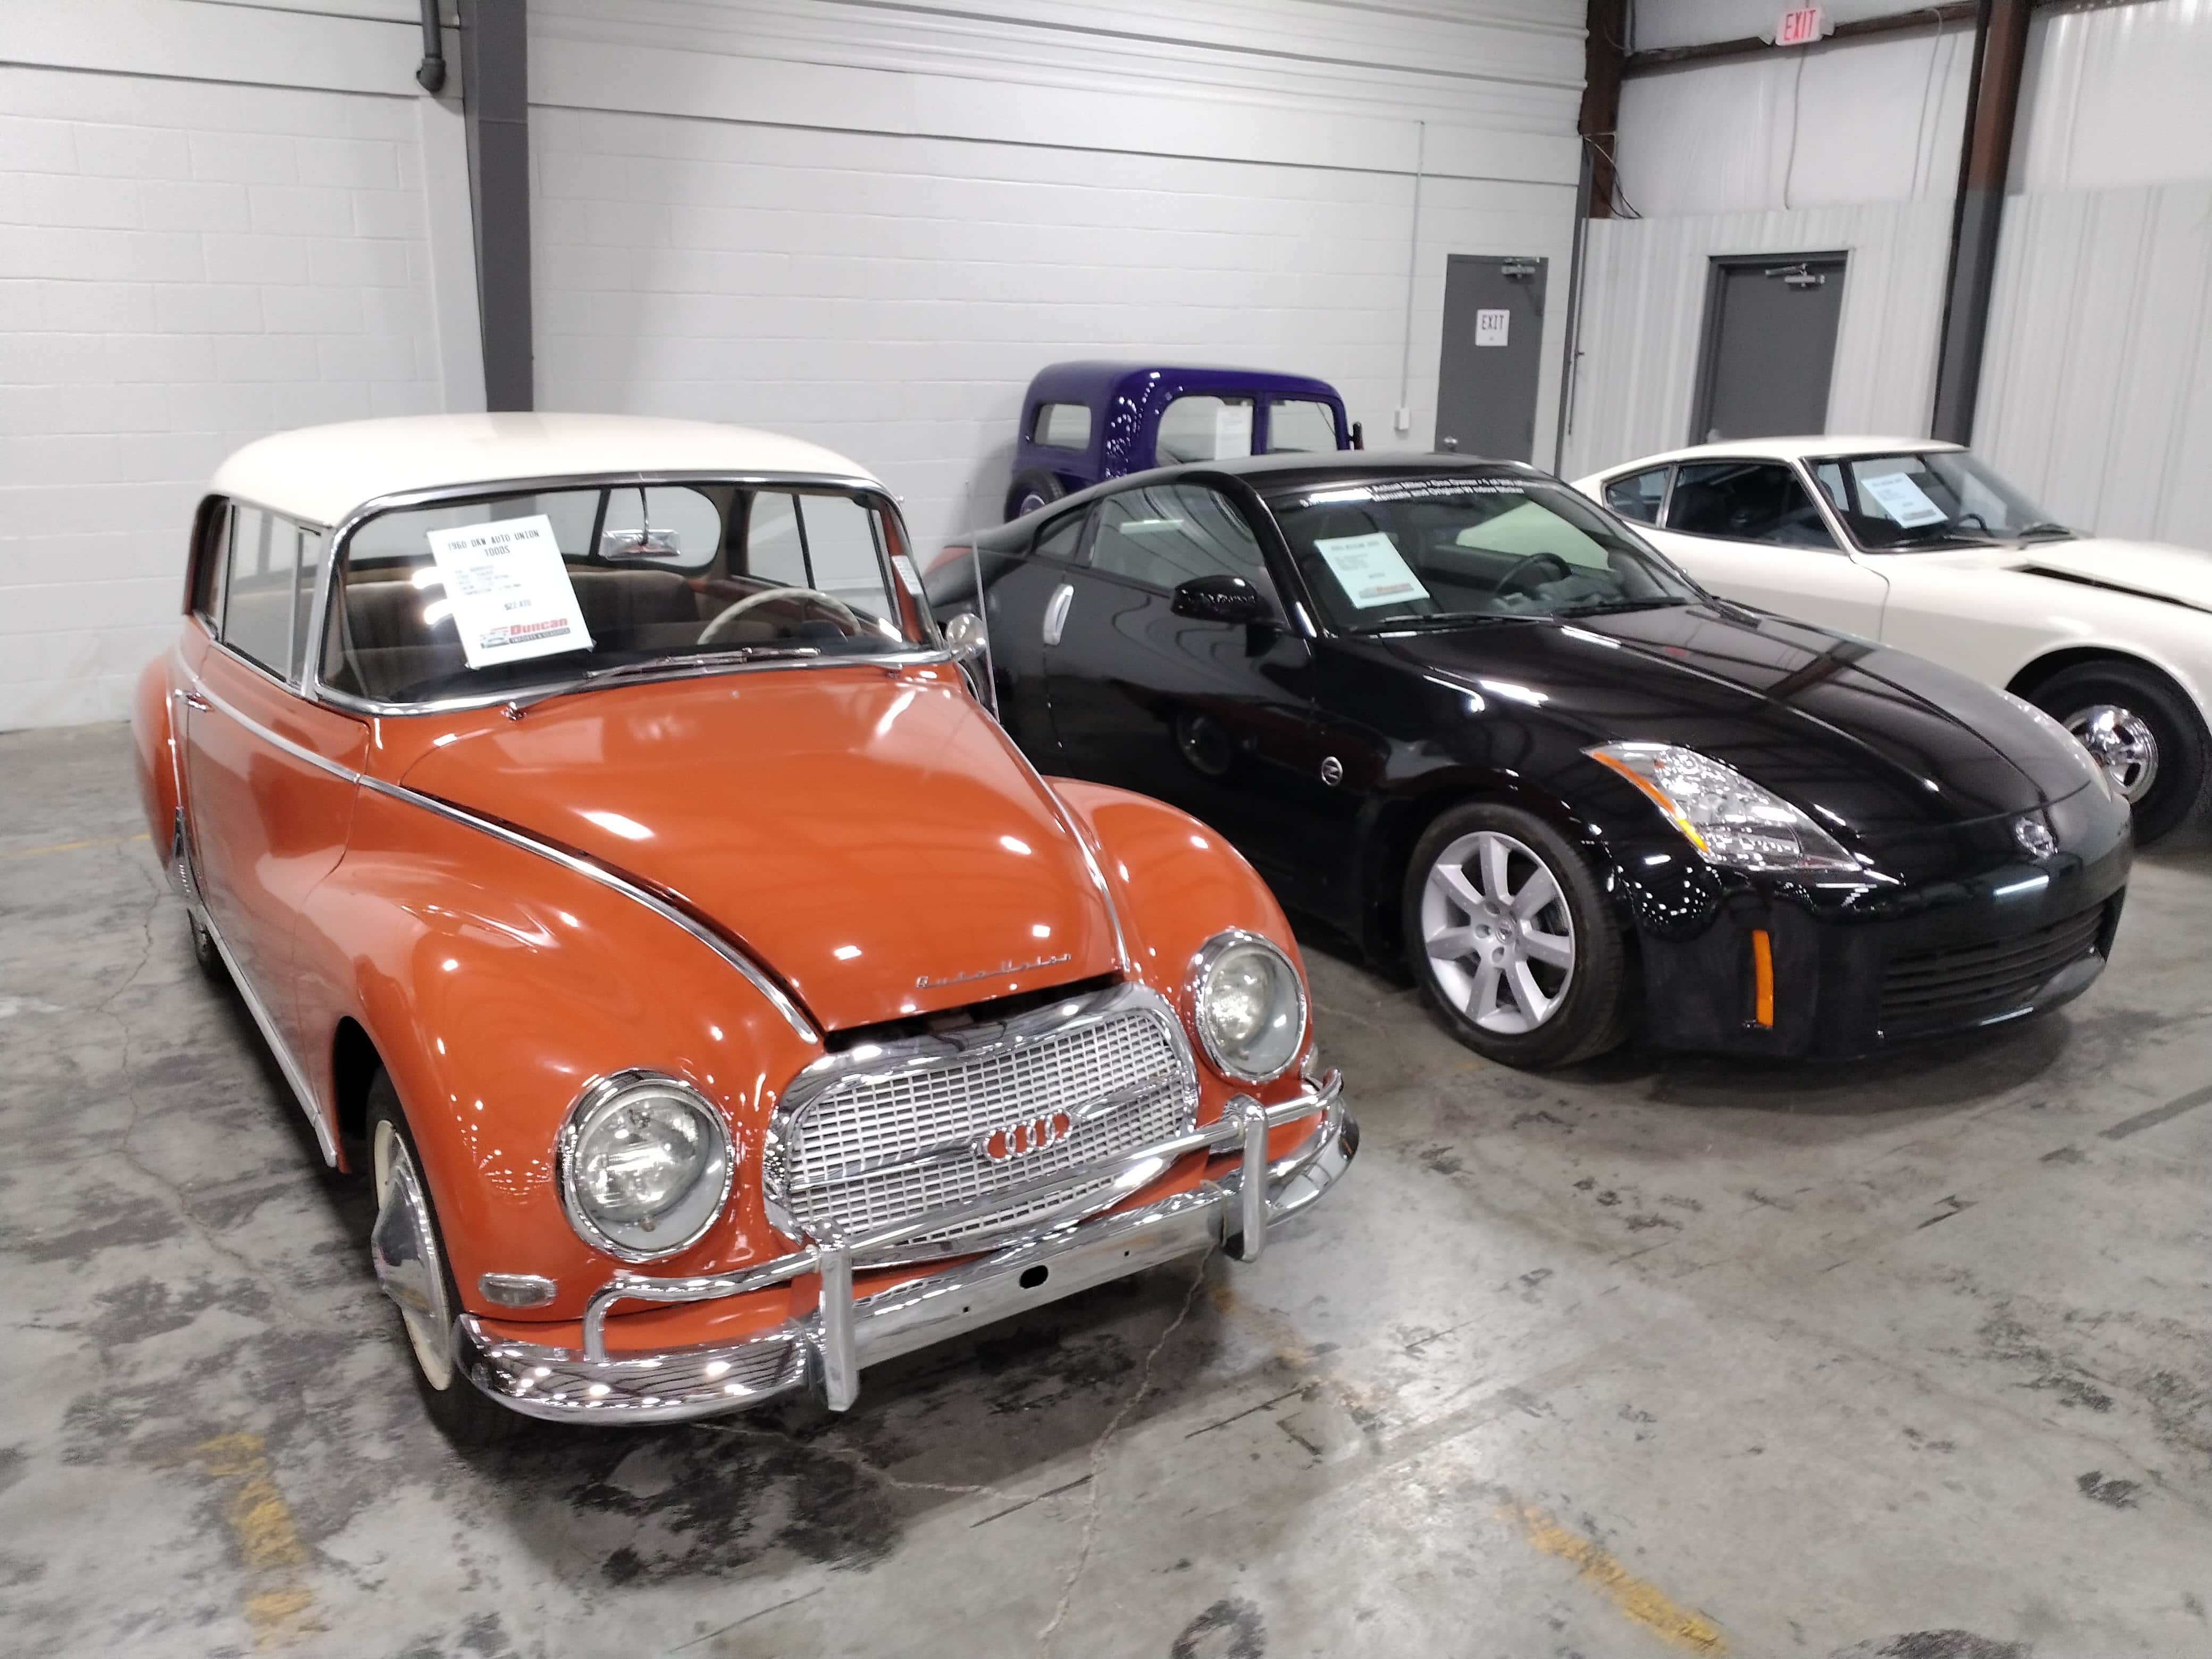 Duncan Imports & Classics - Smyrna, TN, US, used car dealerships